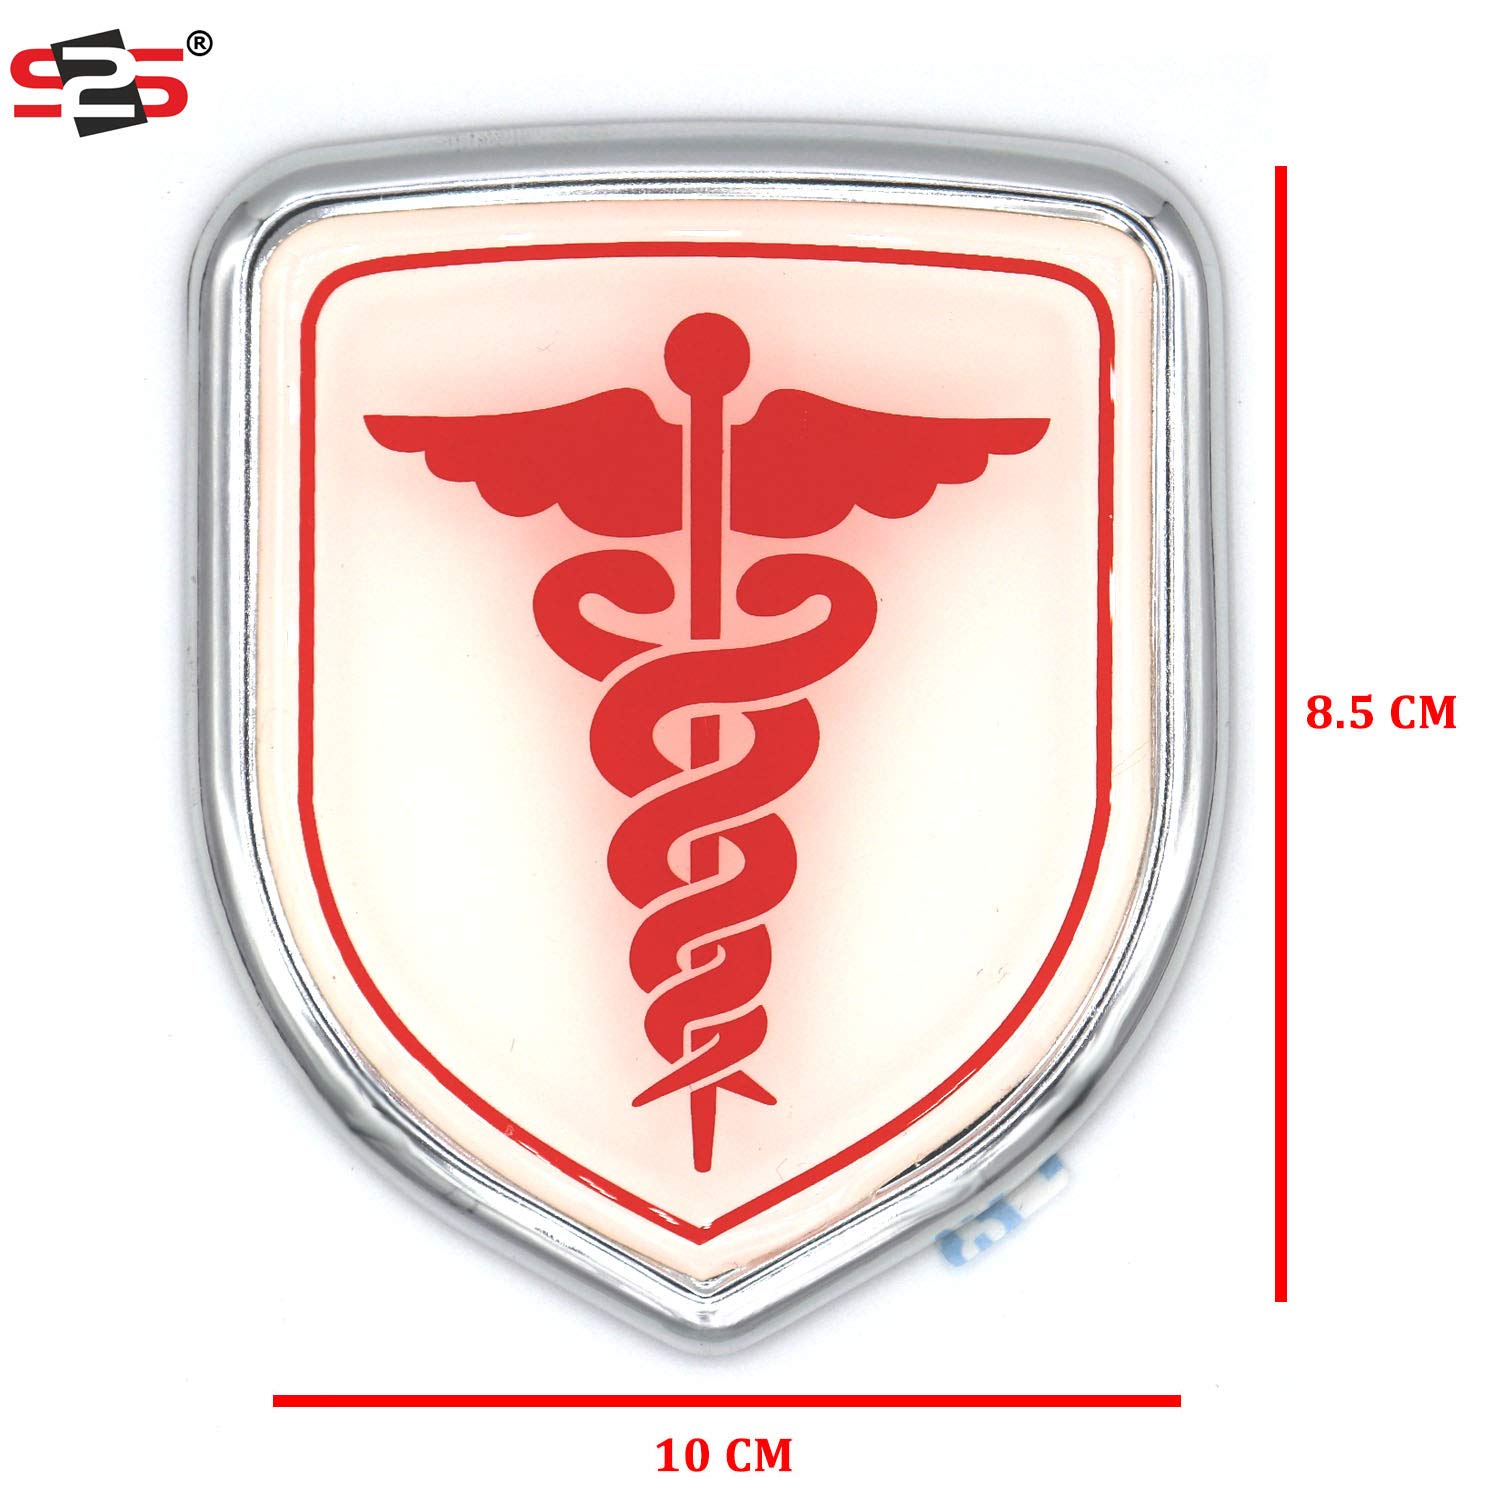 S2S Doctor Stylish 3D Metal Chrome Sticker Emblem Badge Logo For Cars & Bikes